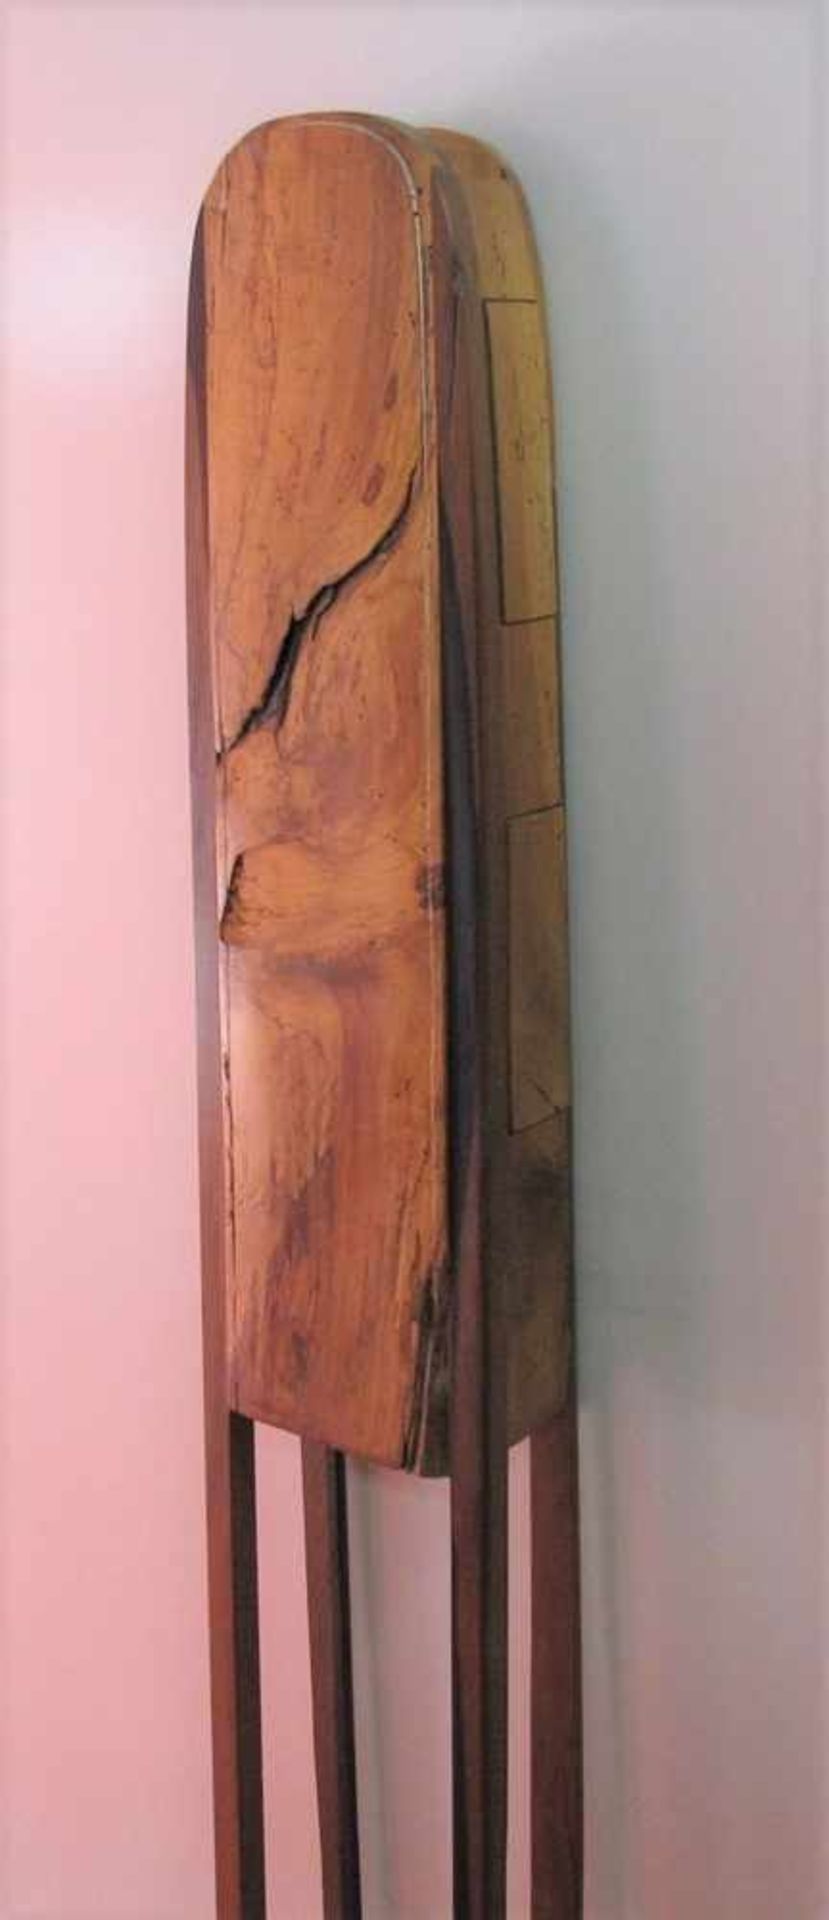 Wand-Objekt mit 2 Schubladen, Edelholz, 164 x 18 x 11 cm.- - -19.00 % buyer's premium on the - Image 2 of 3